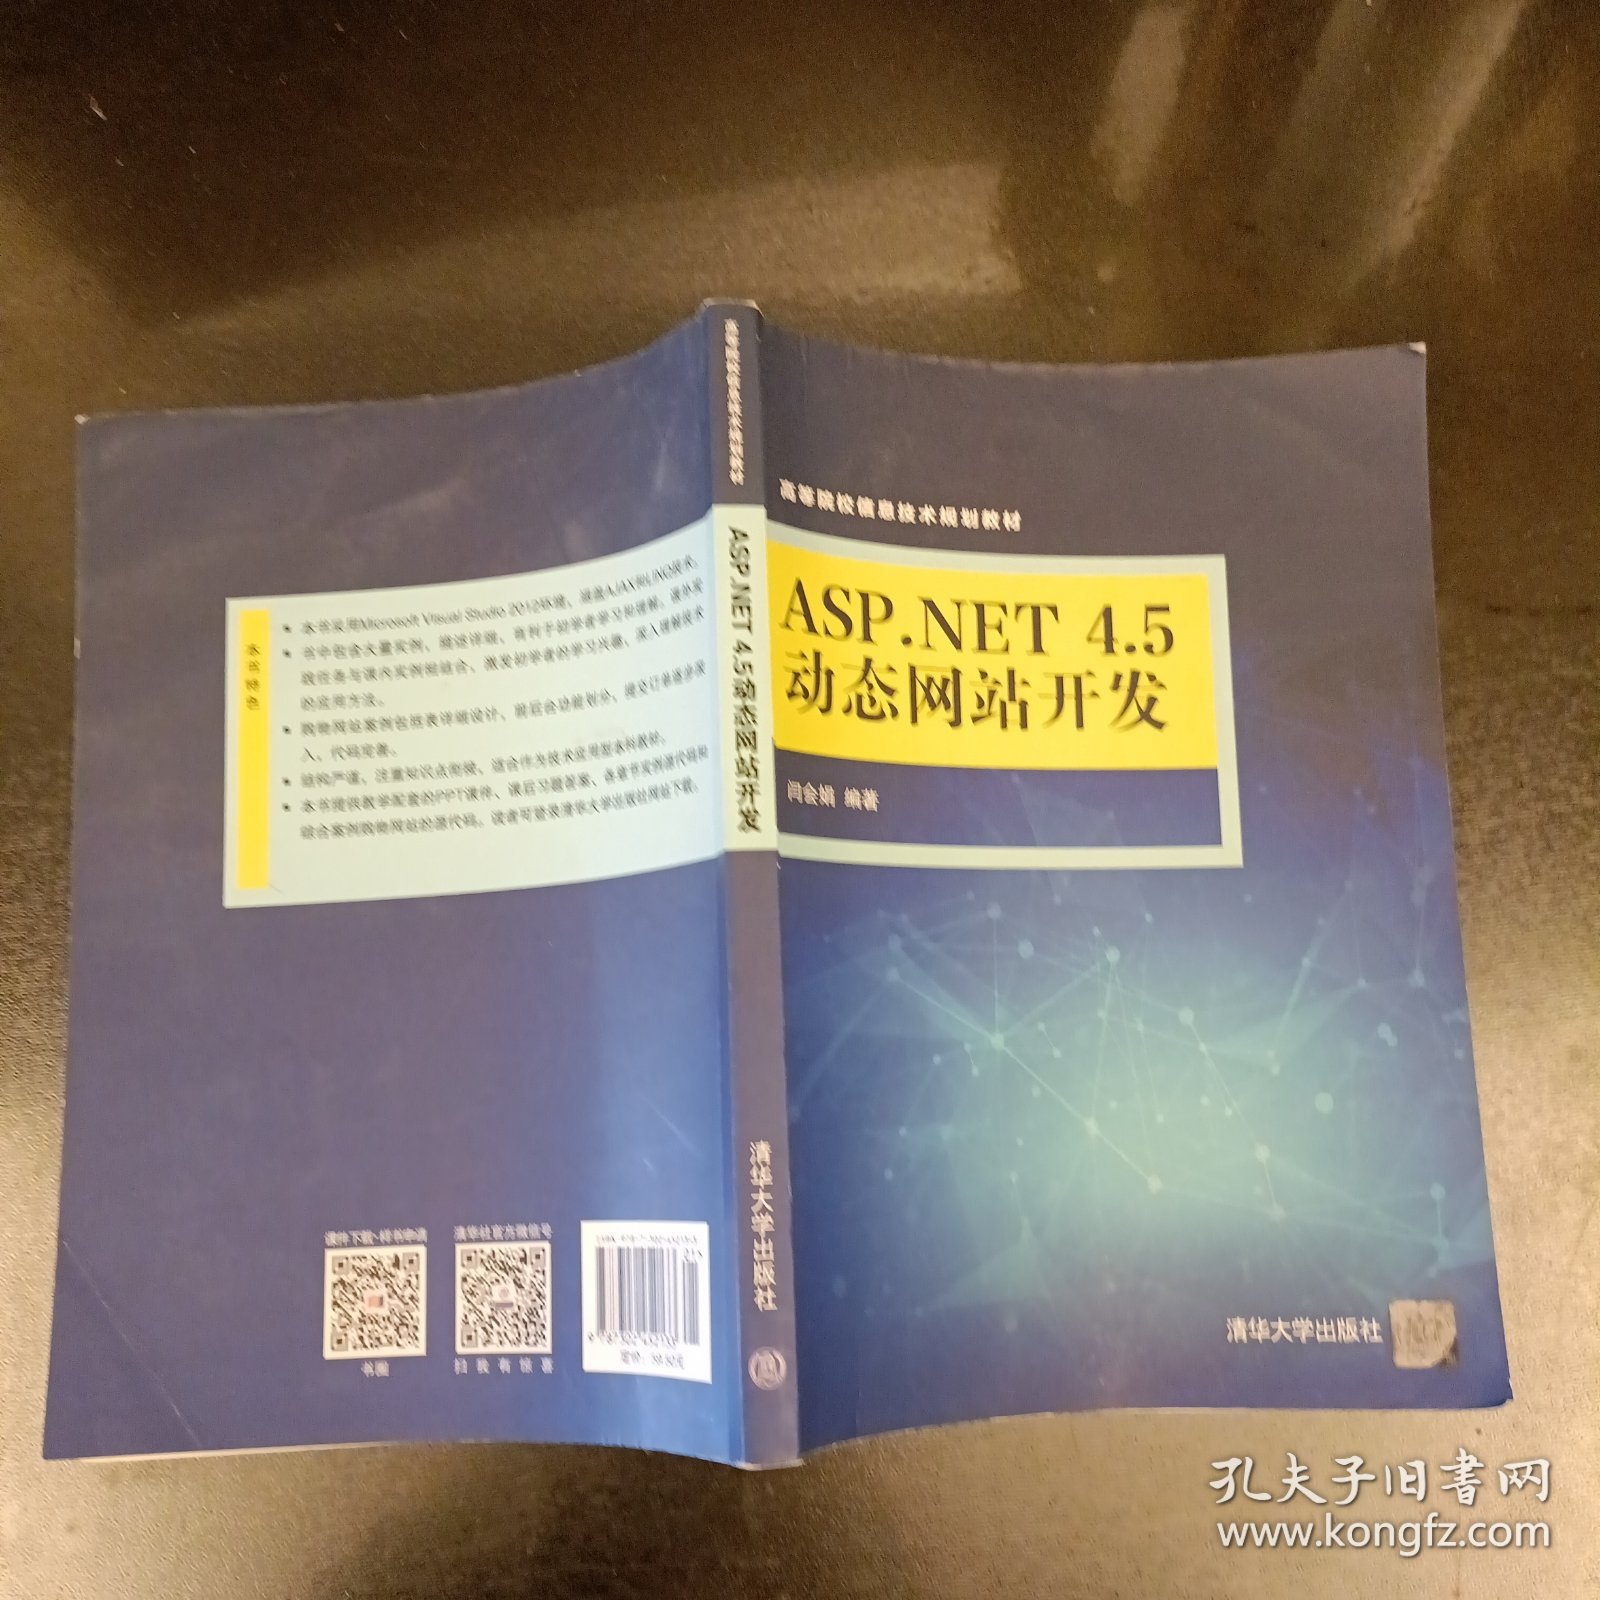 ASP.NET 4.5动态网站开发 高等院校信息技术规划教材 内有勾划字迹水渍如图 (前屋68B)